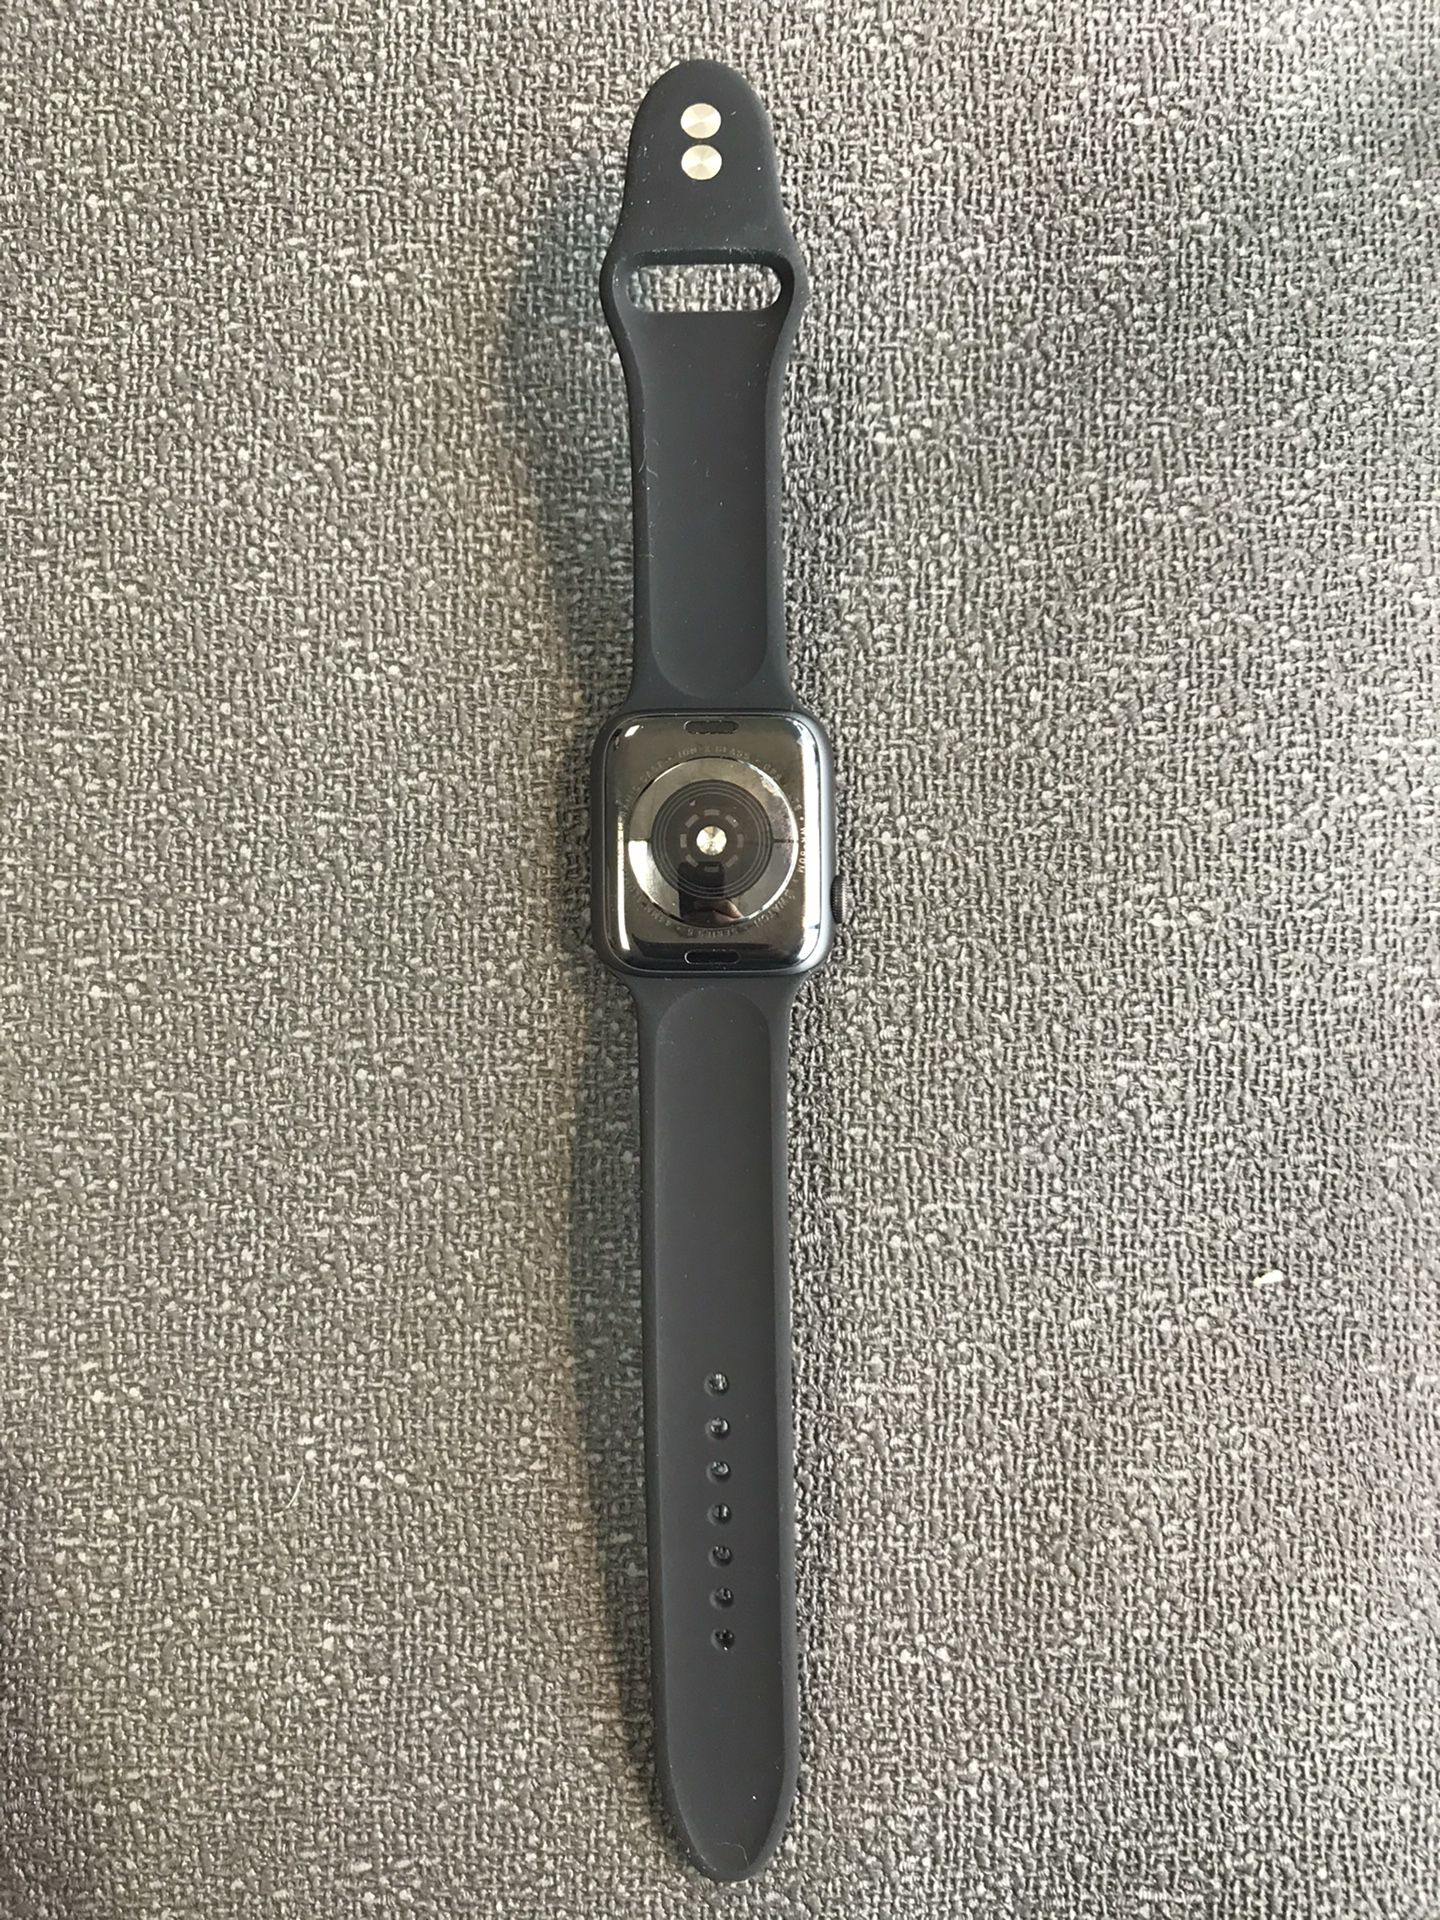 Apple Watch series 5 44mm, cellular unlocked